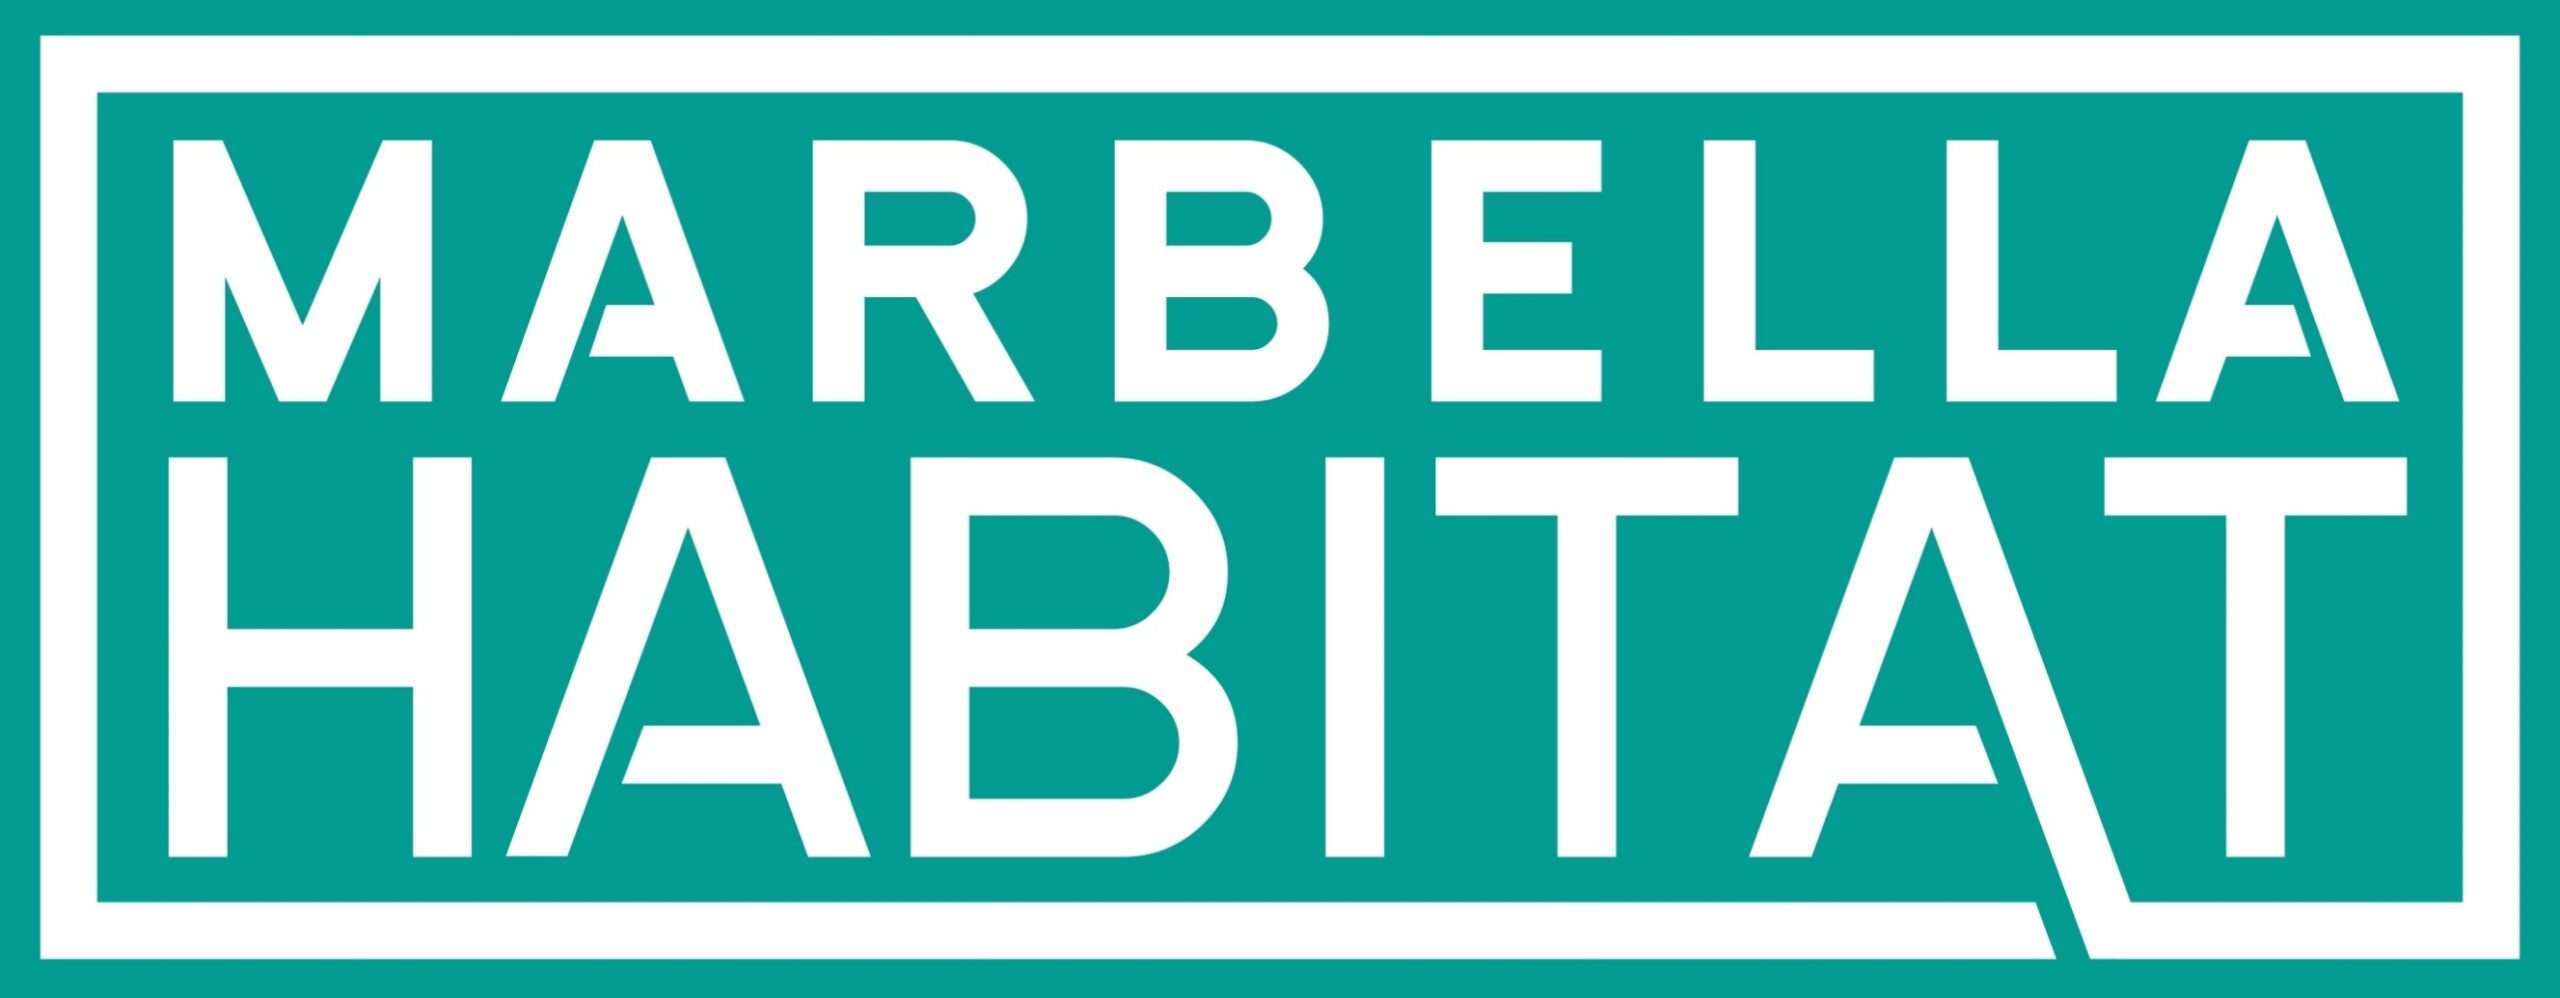 Marbella Habitat